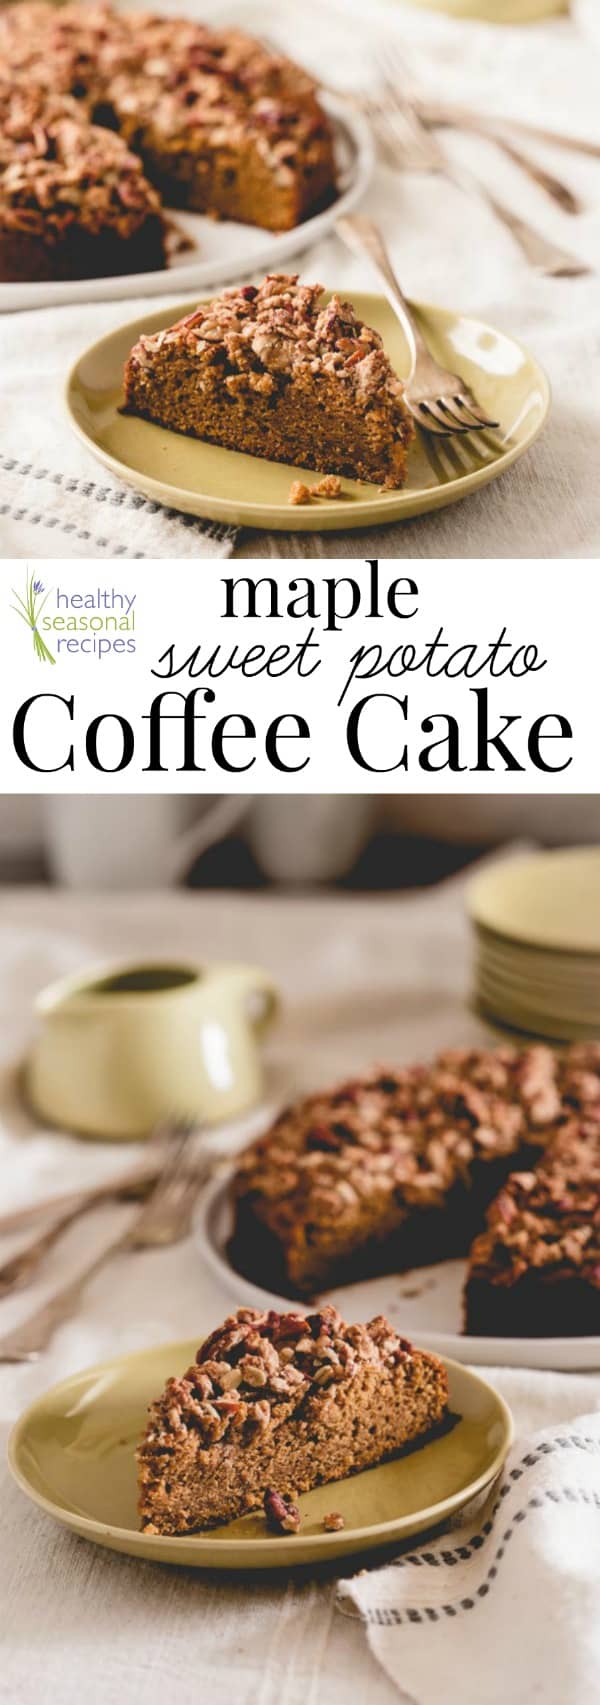 Sweet potato coffee cake photo collage with text